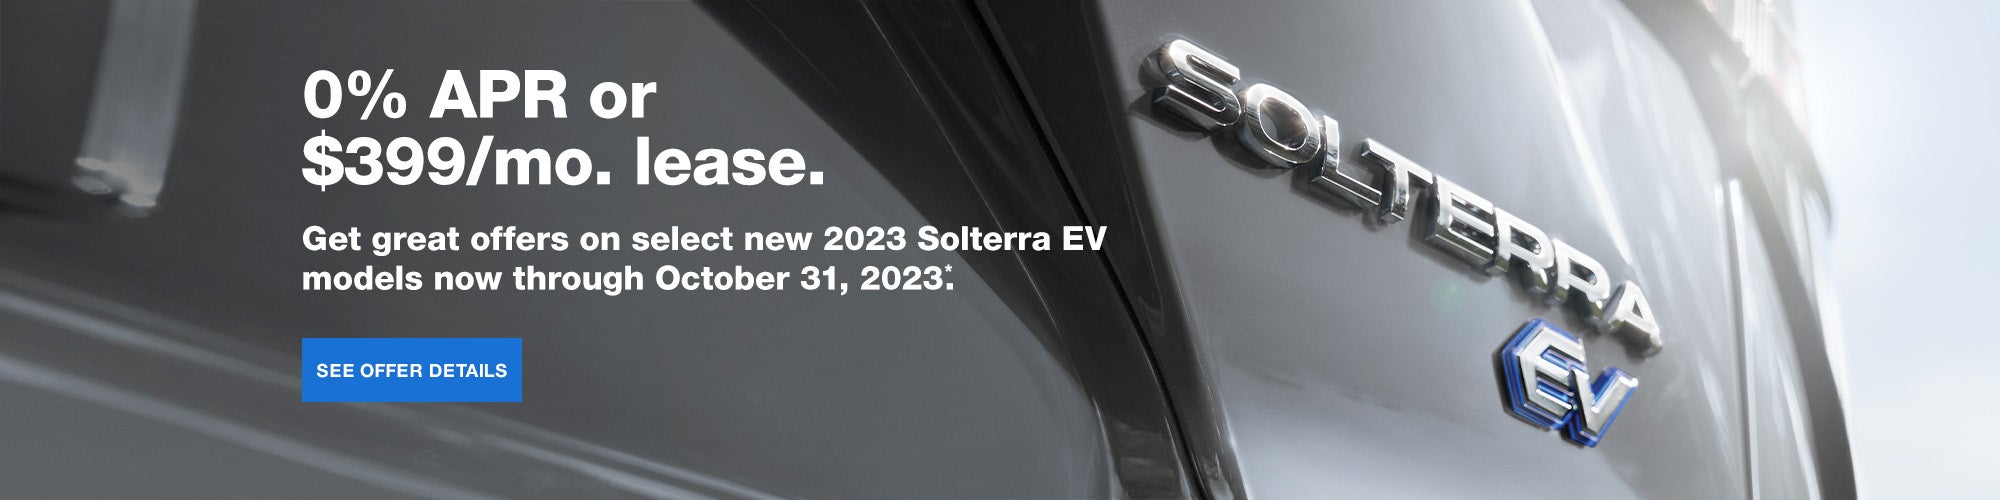 0% APR or $399/mo. lease - 2023 Solterra EV